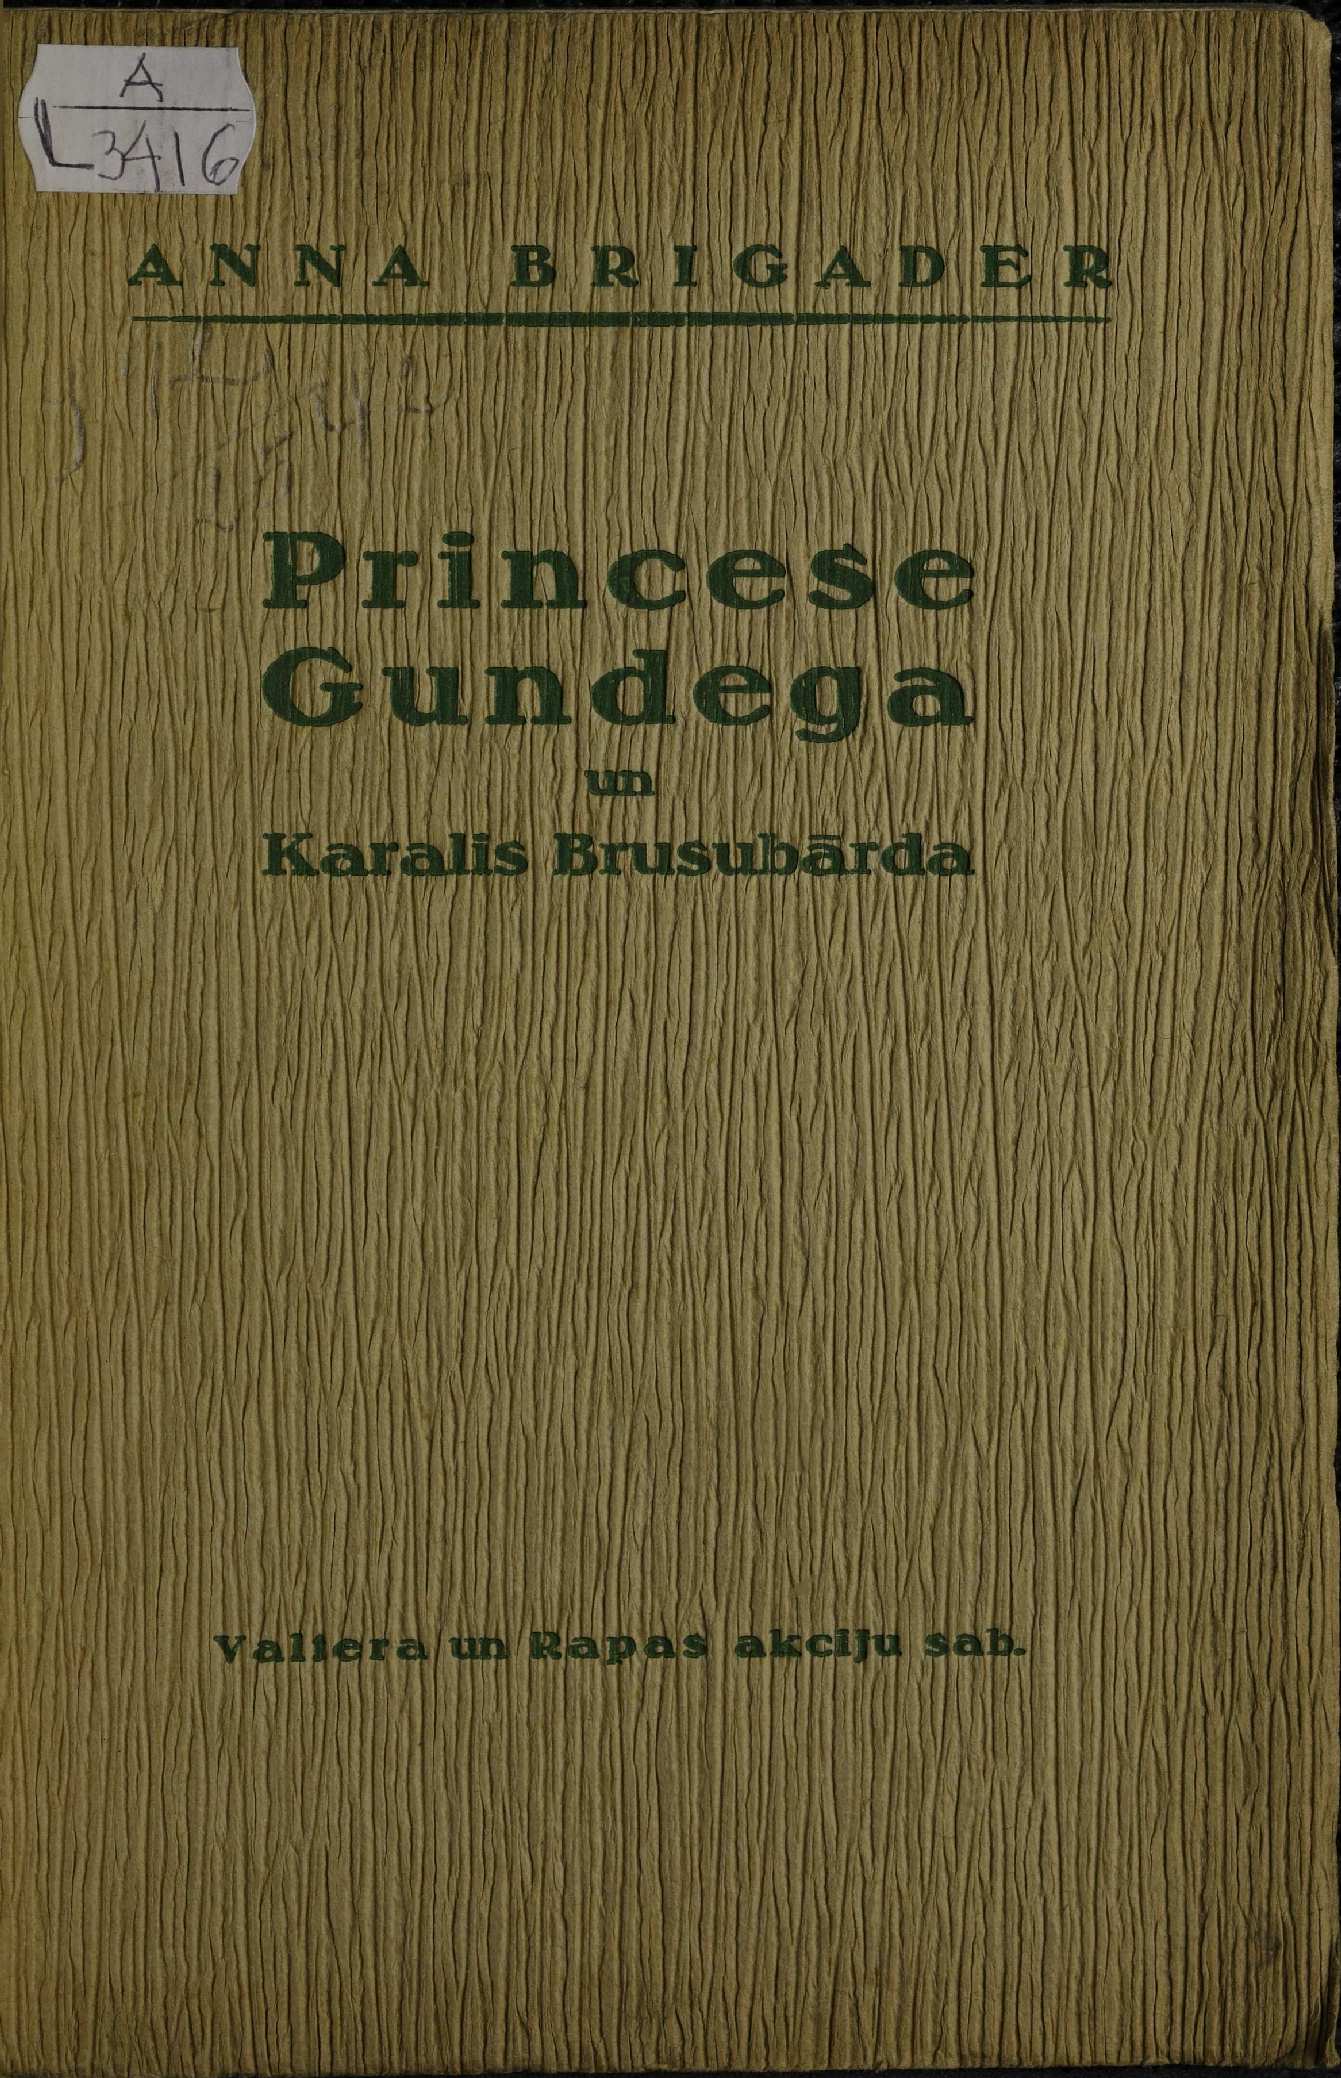 Princese Gundega un karalis Brusubārda 1.lpp